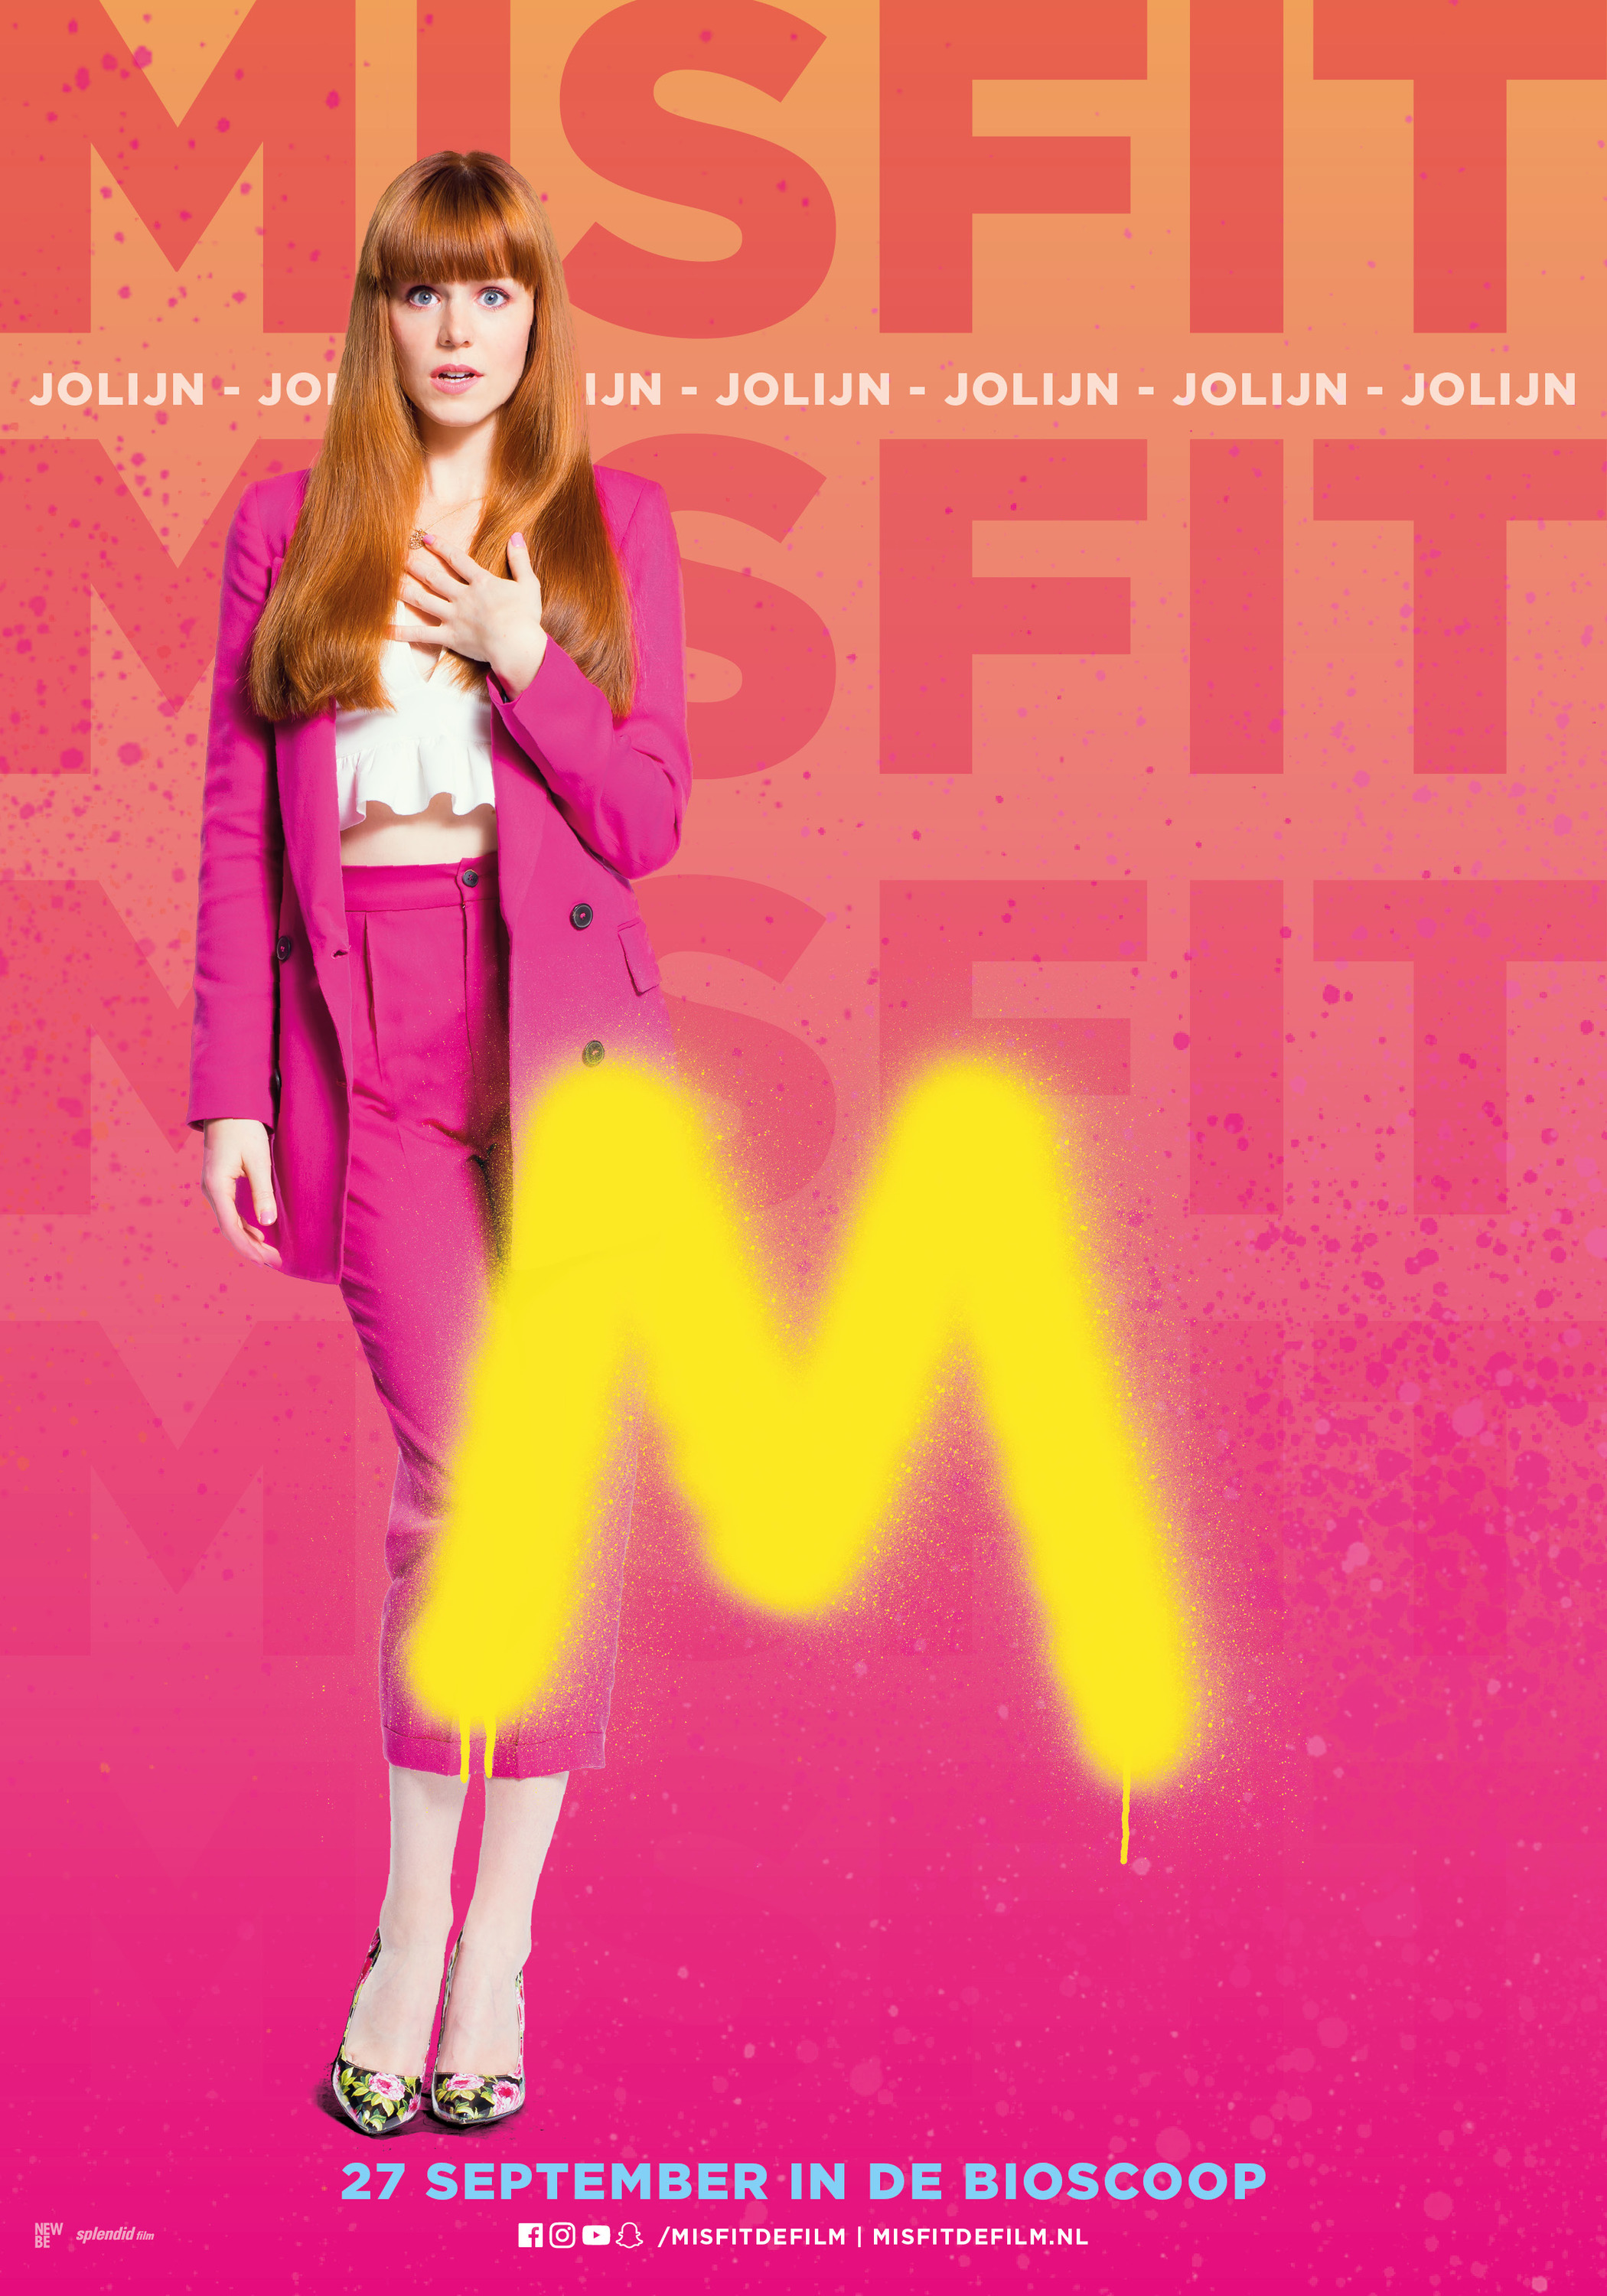 Mega Sized Movie Poster Image for Misfit (#11 of 13)